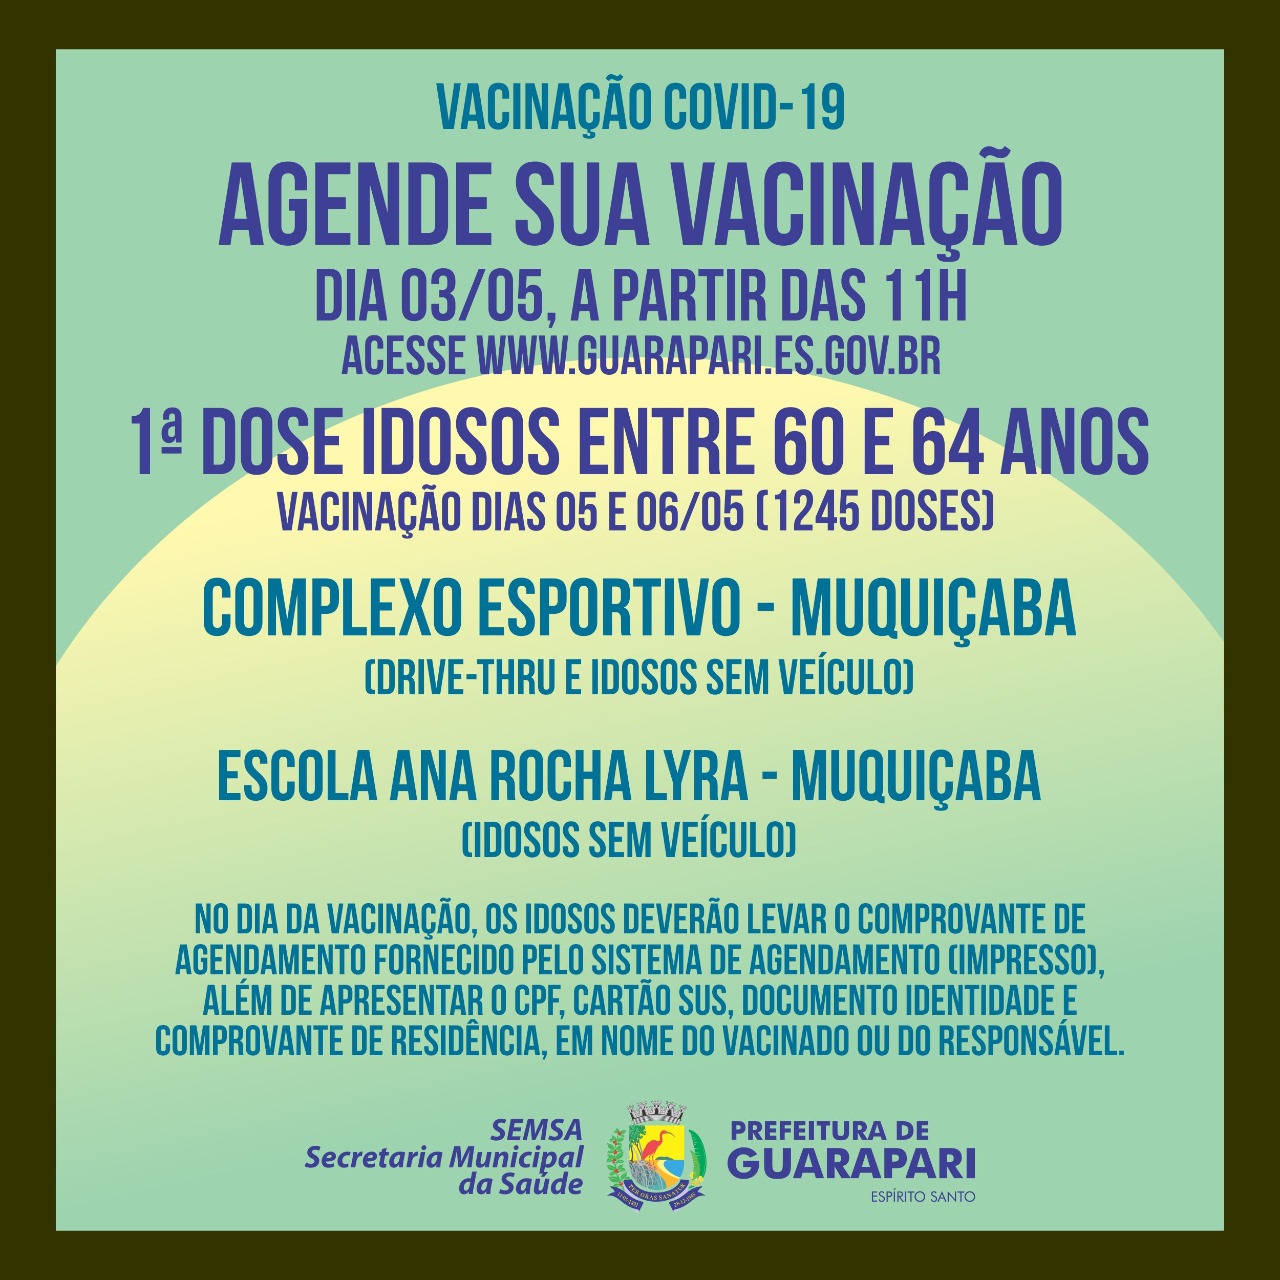 Covid-19: Prefeitura de Guarapari abre novo agendamento para vacinar idosos de 60 a 64 anos, na próxima segunda-feira (03) 